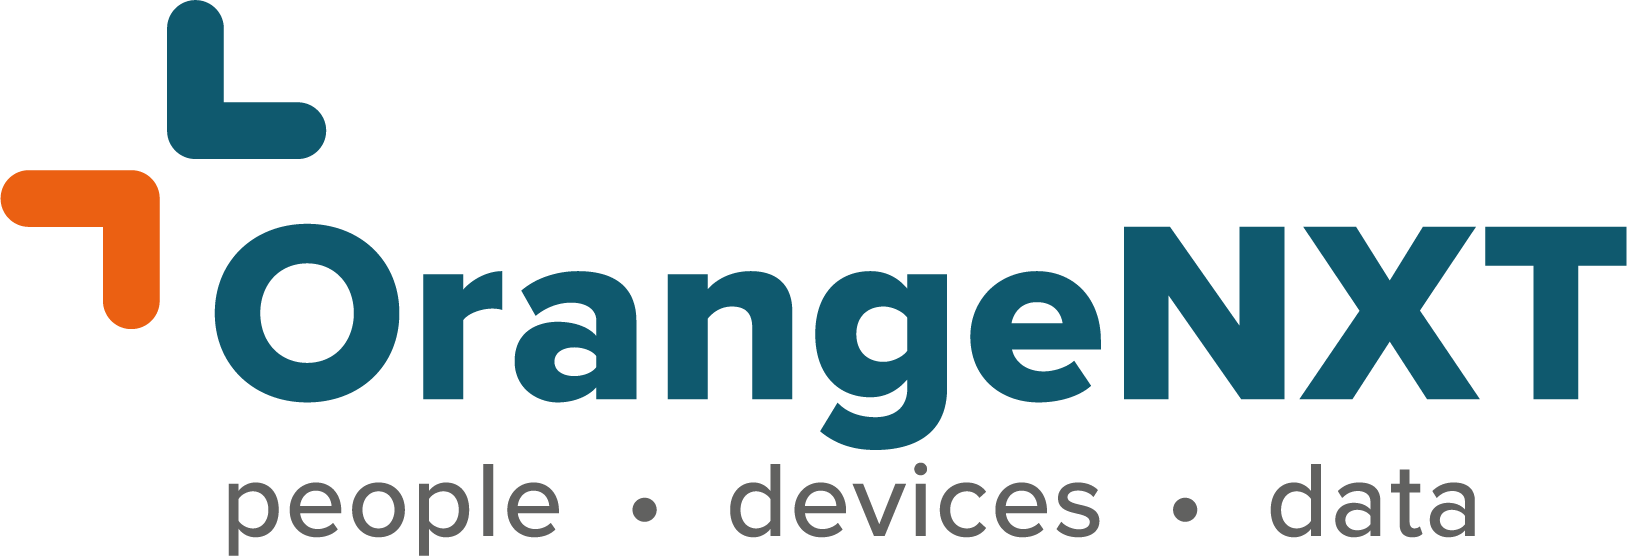 OrangeNXT logo